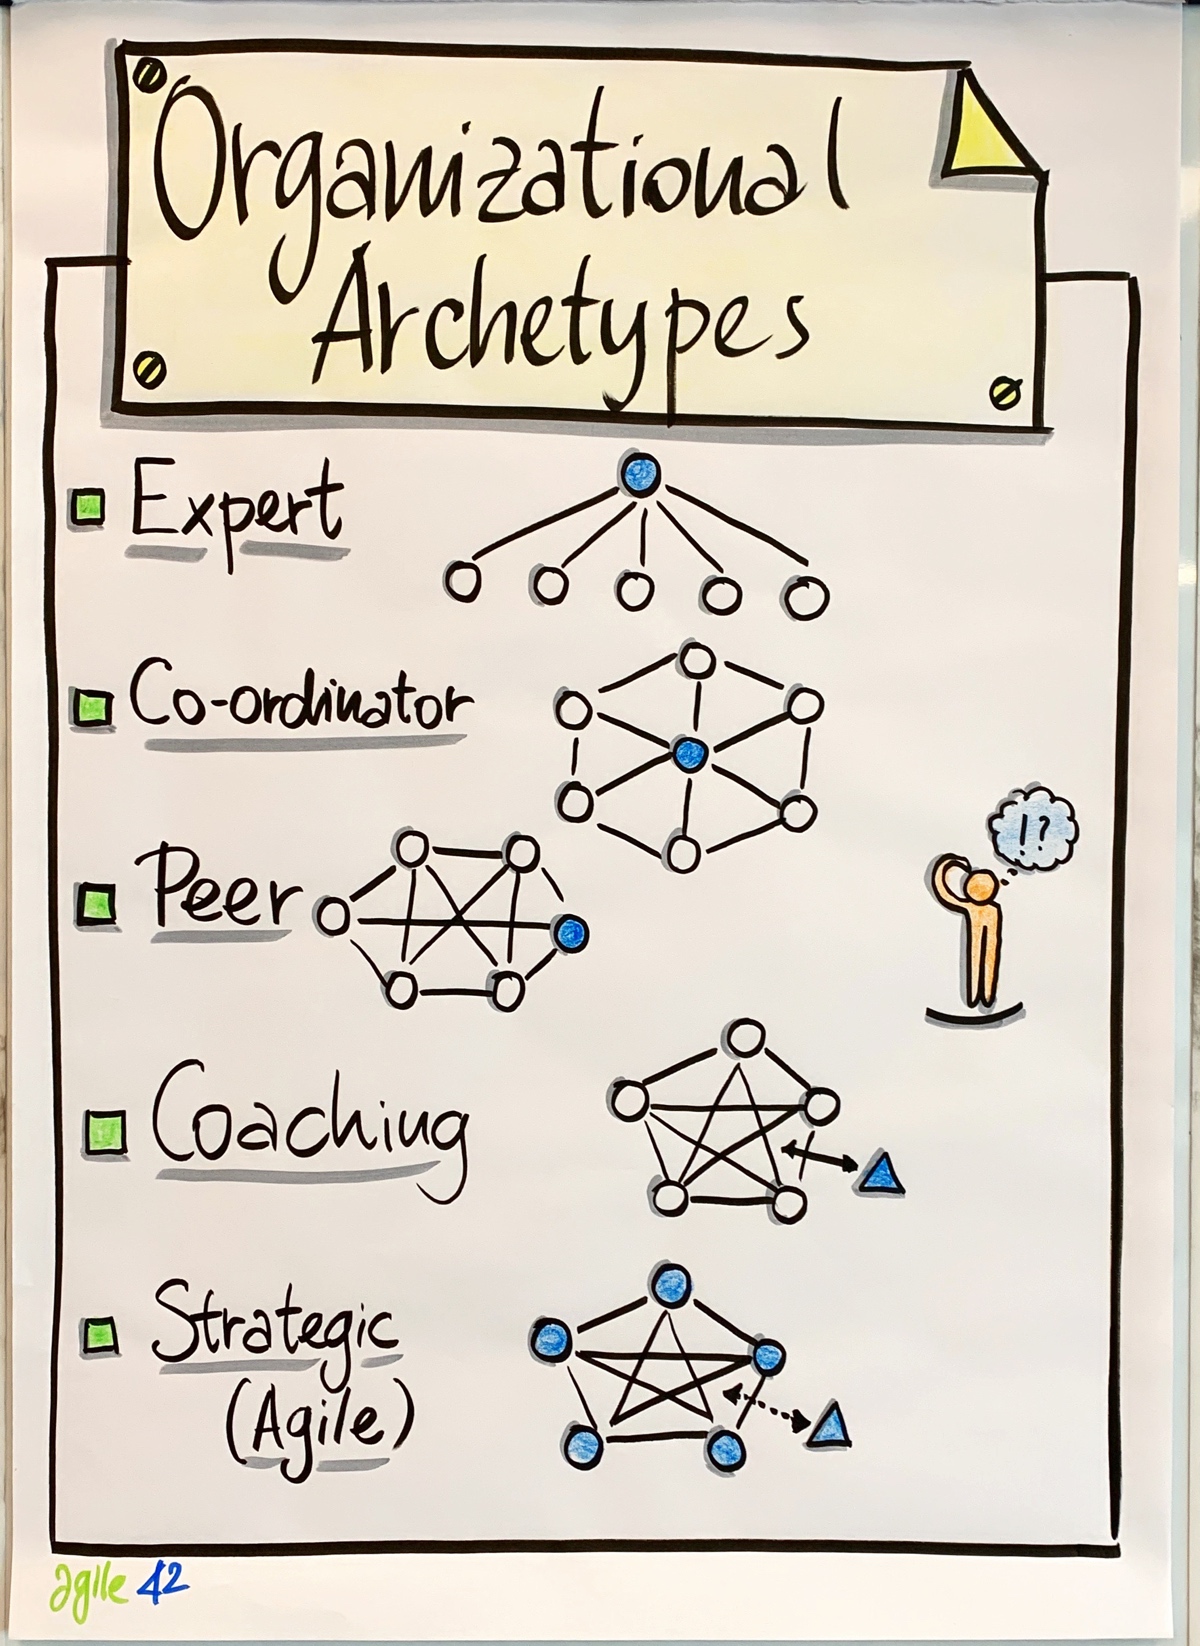 Drawing of Organizational Archetypes